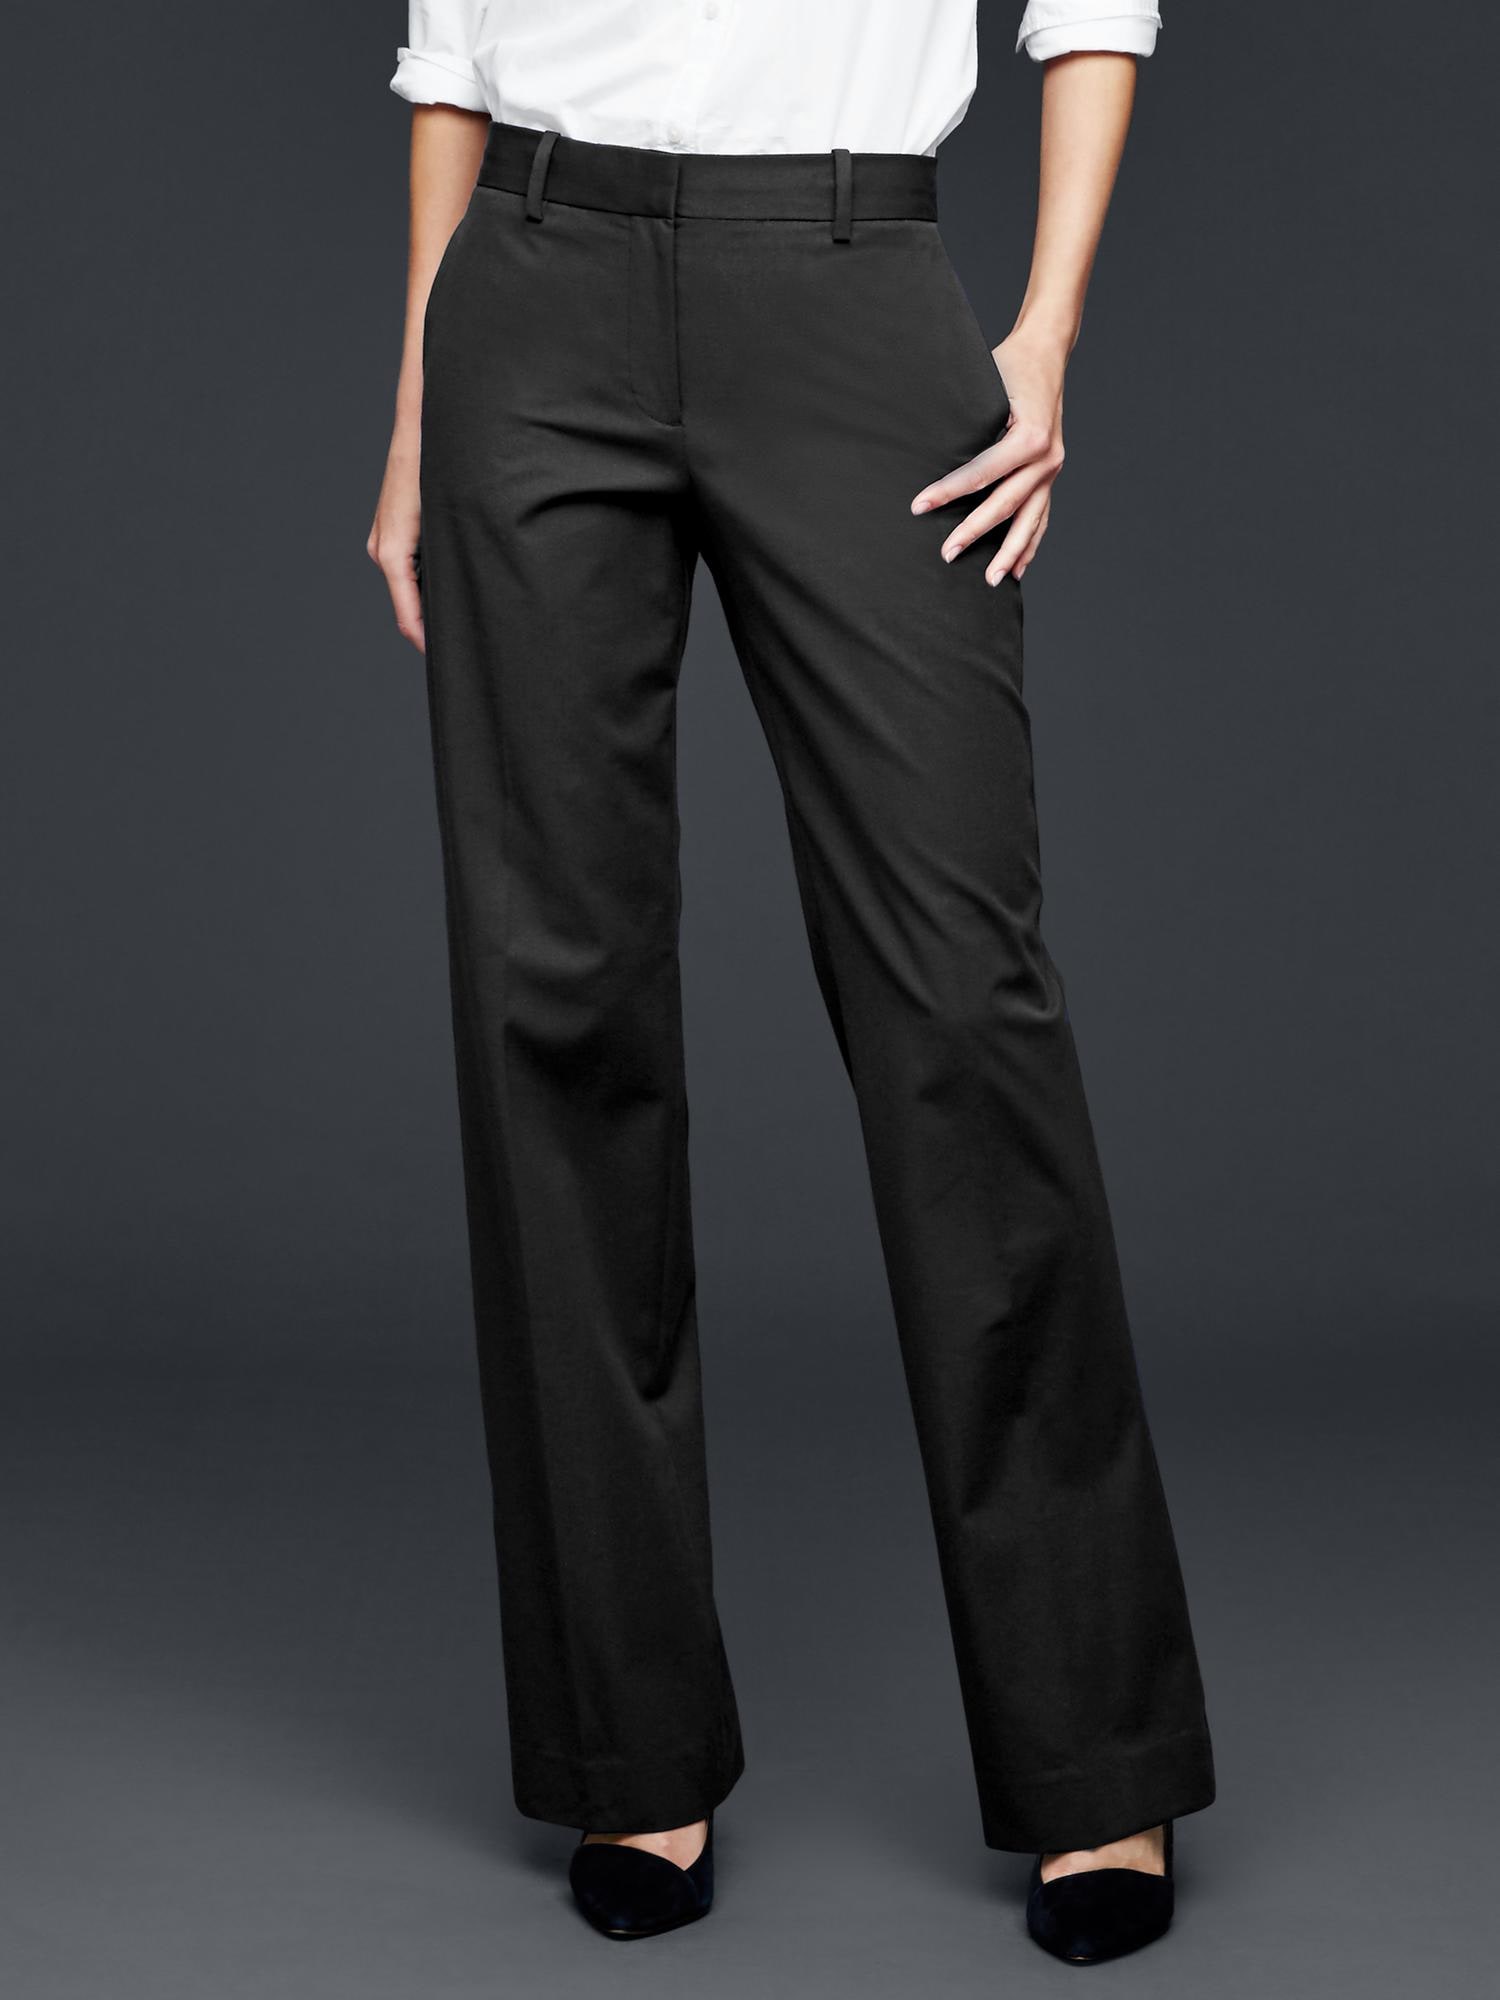 Gap Solid Black Dress Pants Size 16 - 71% off